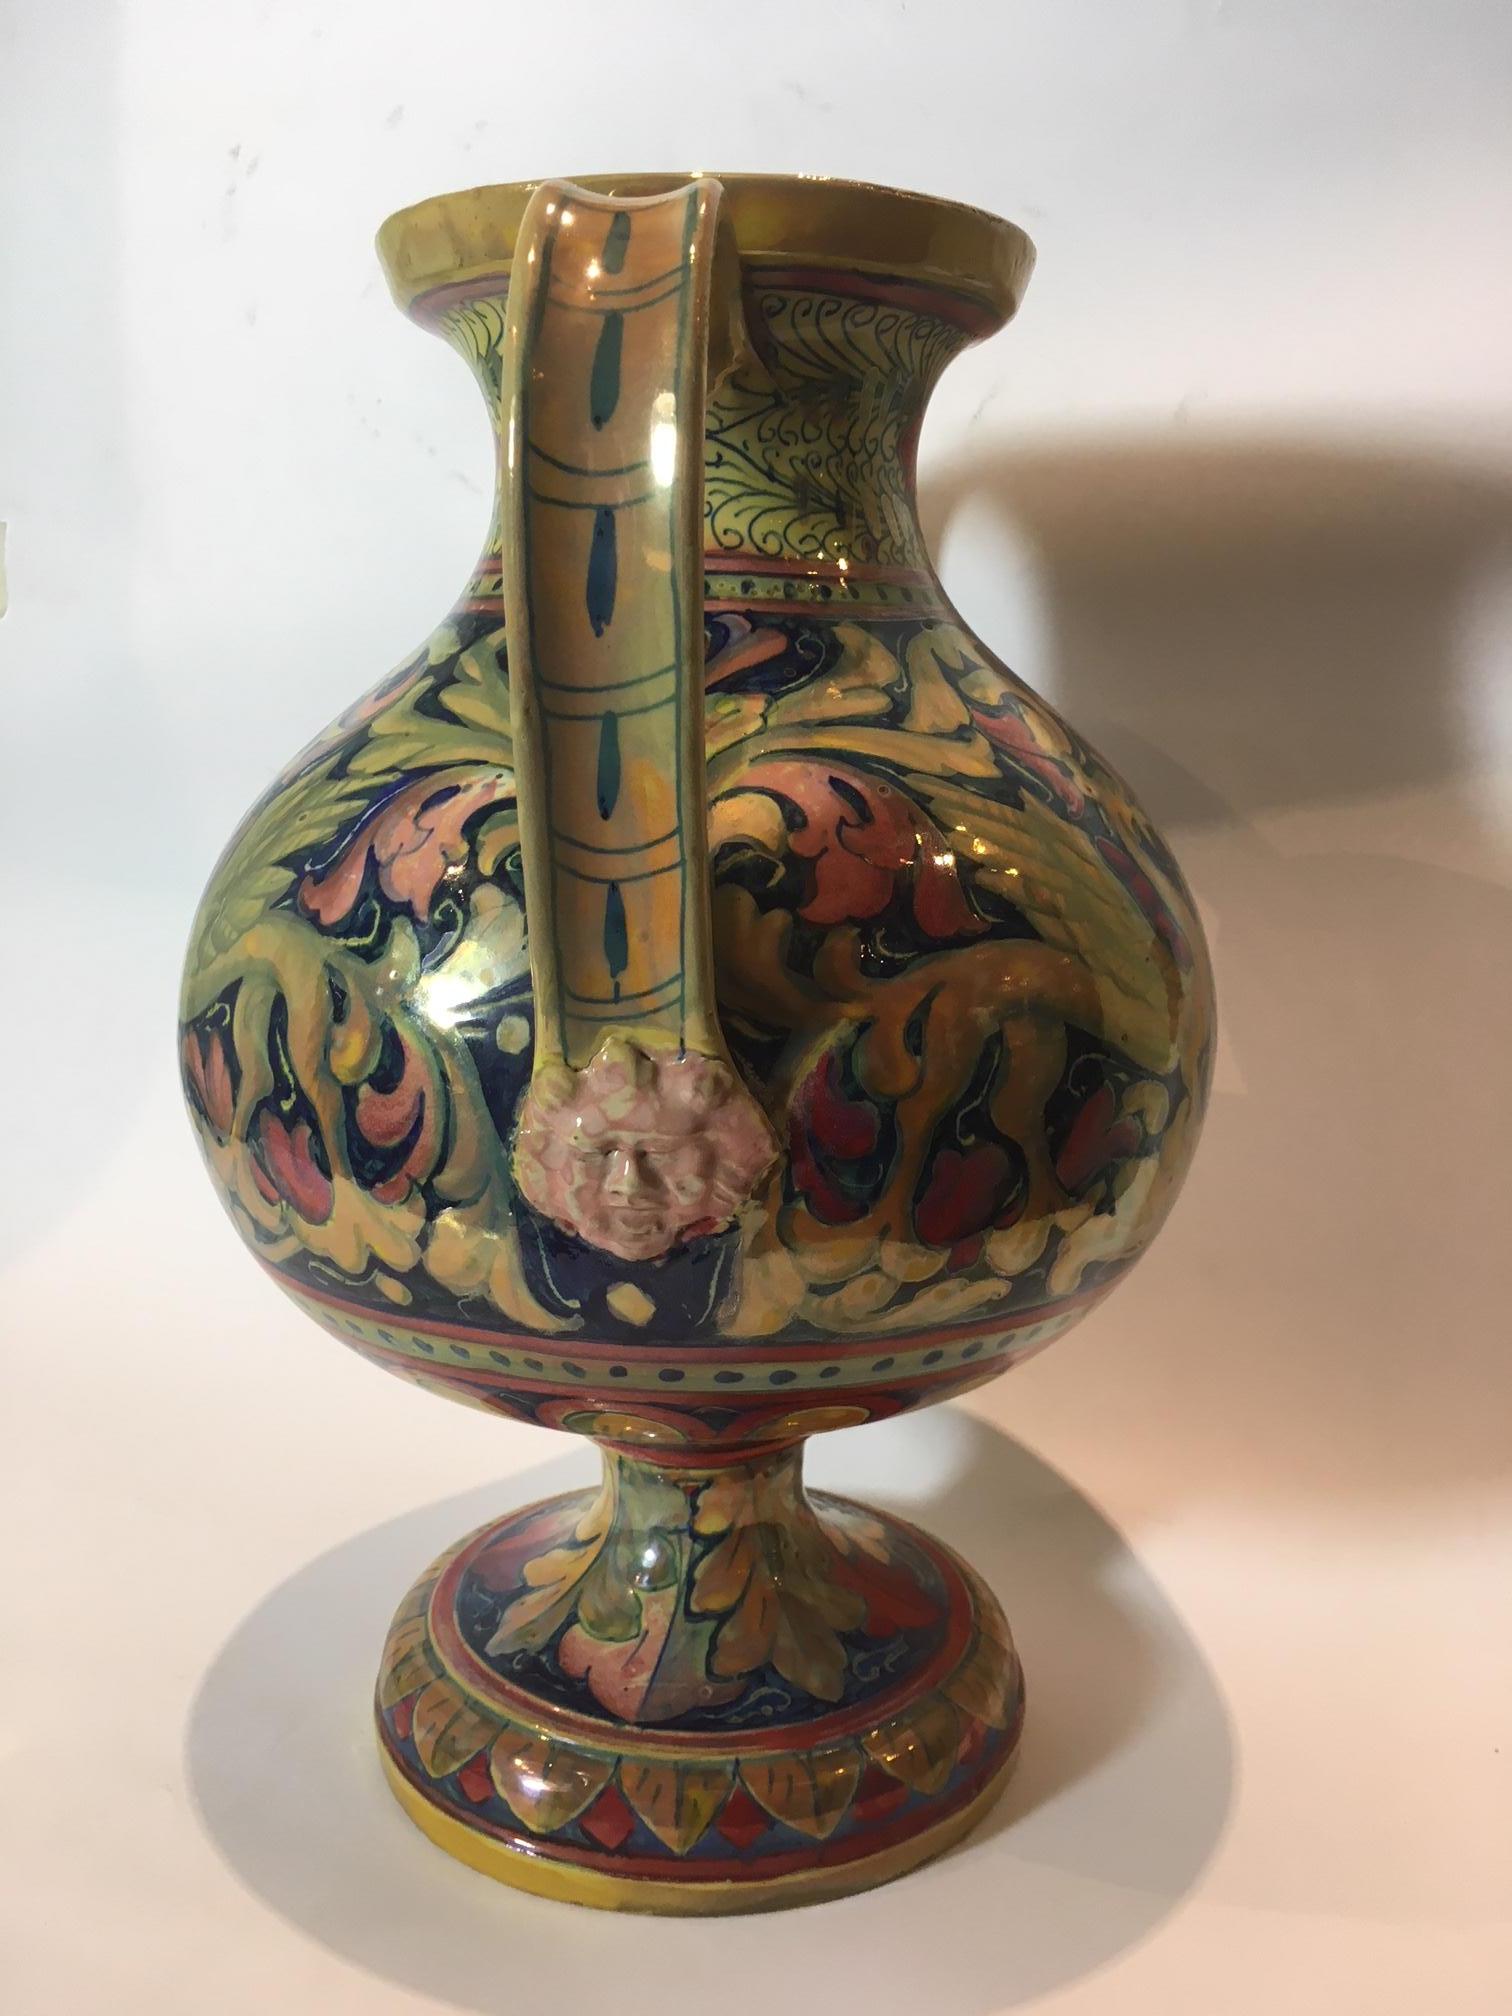 Renaissance Revival 20th Century Renaissence Revival Polychrome Drawings Pottery Gualdo Tadino Vase For Sale